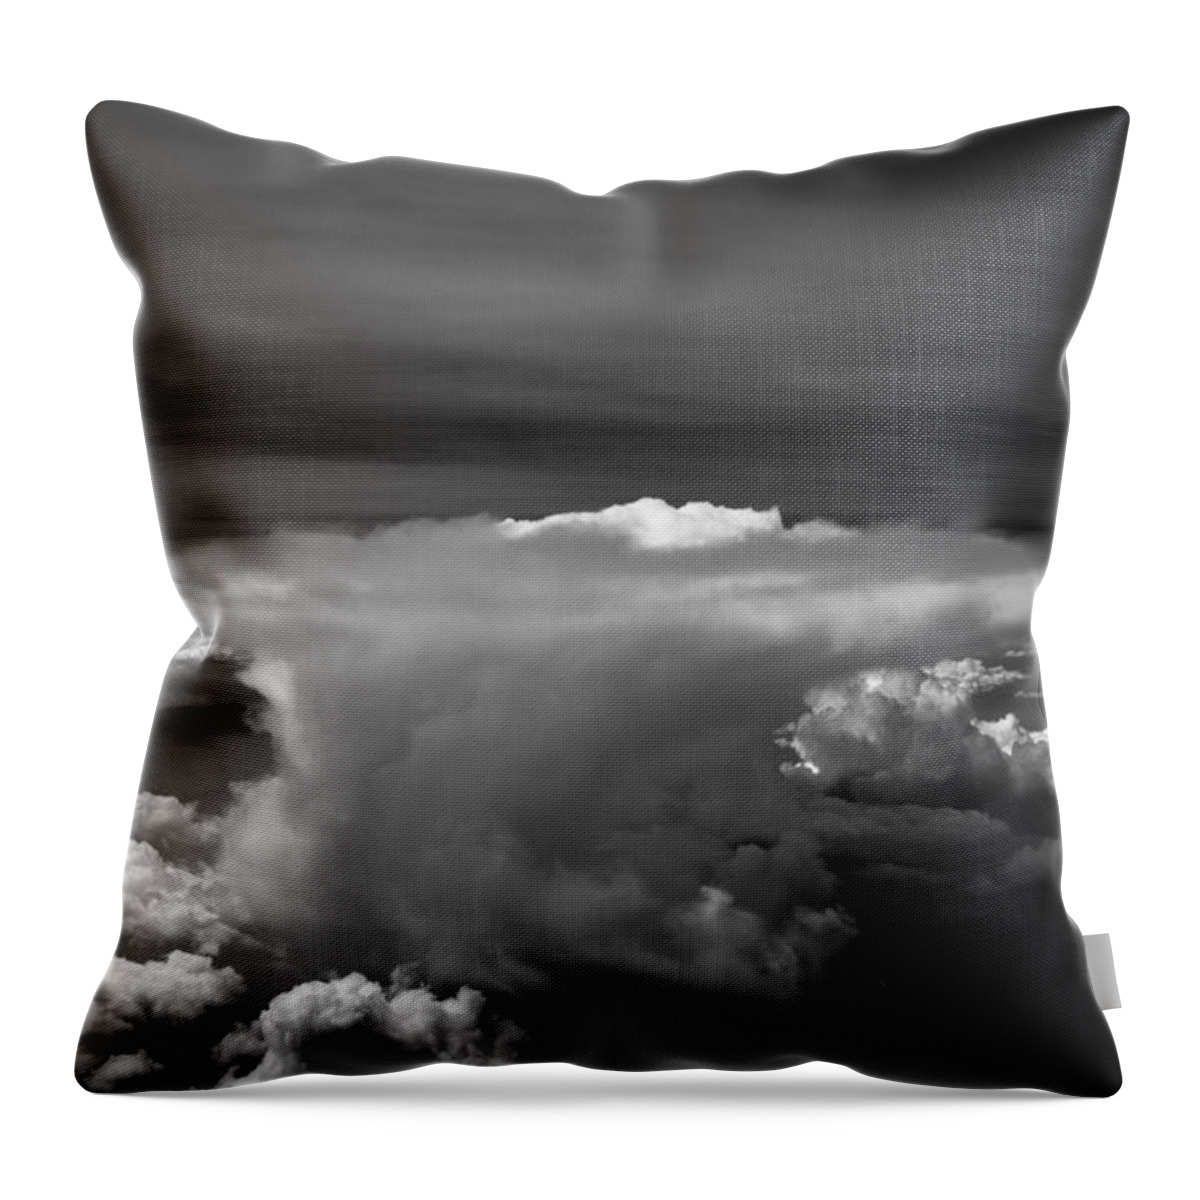 Colorado Throw Pillow featuring the photograph Colorado Anvil by John Daly